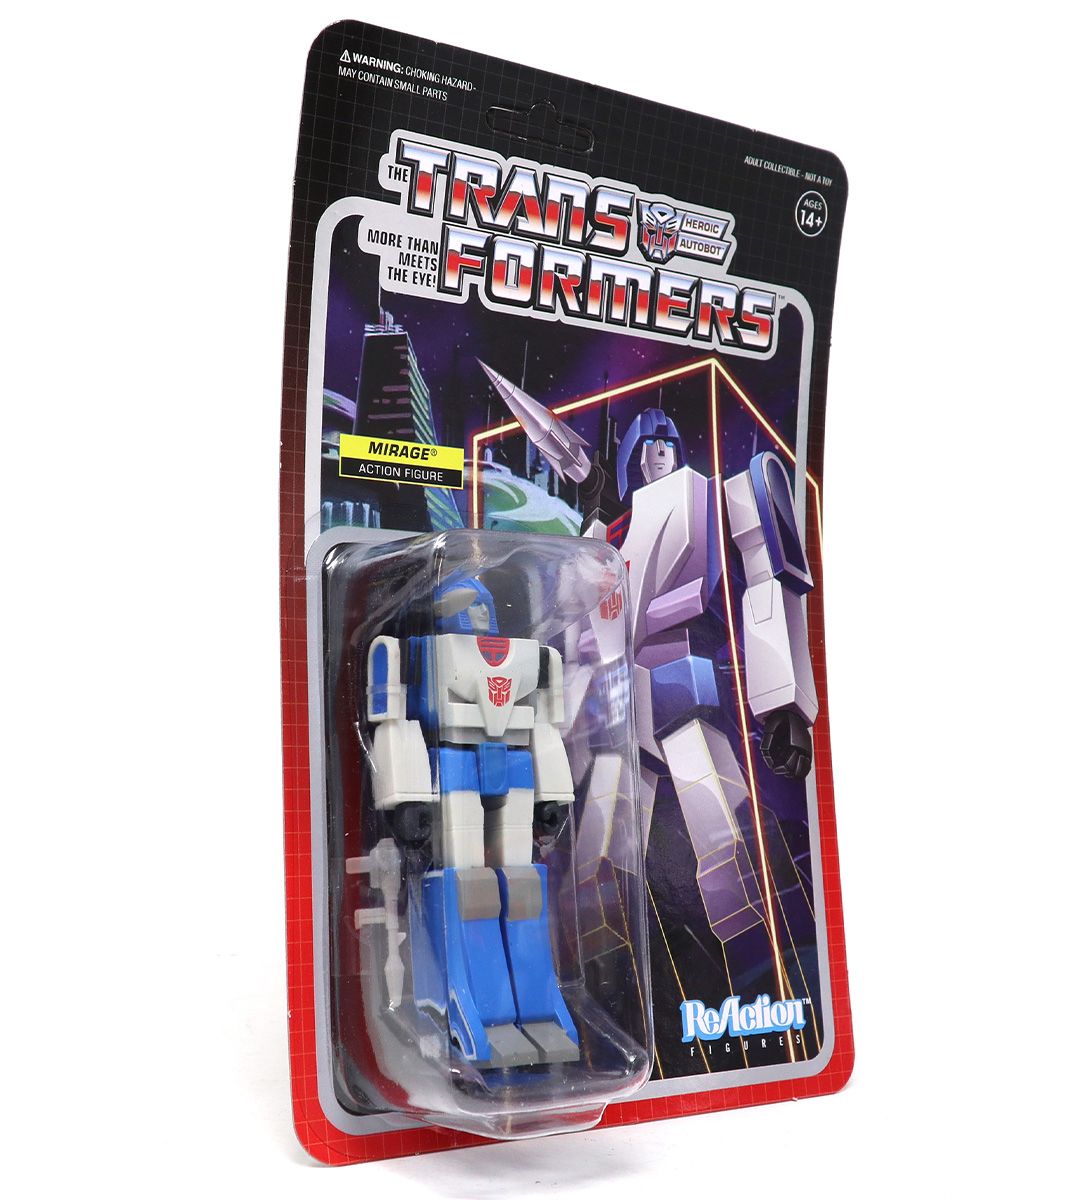 Mirage - Transformers wave 2 - ReAction figure